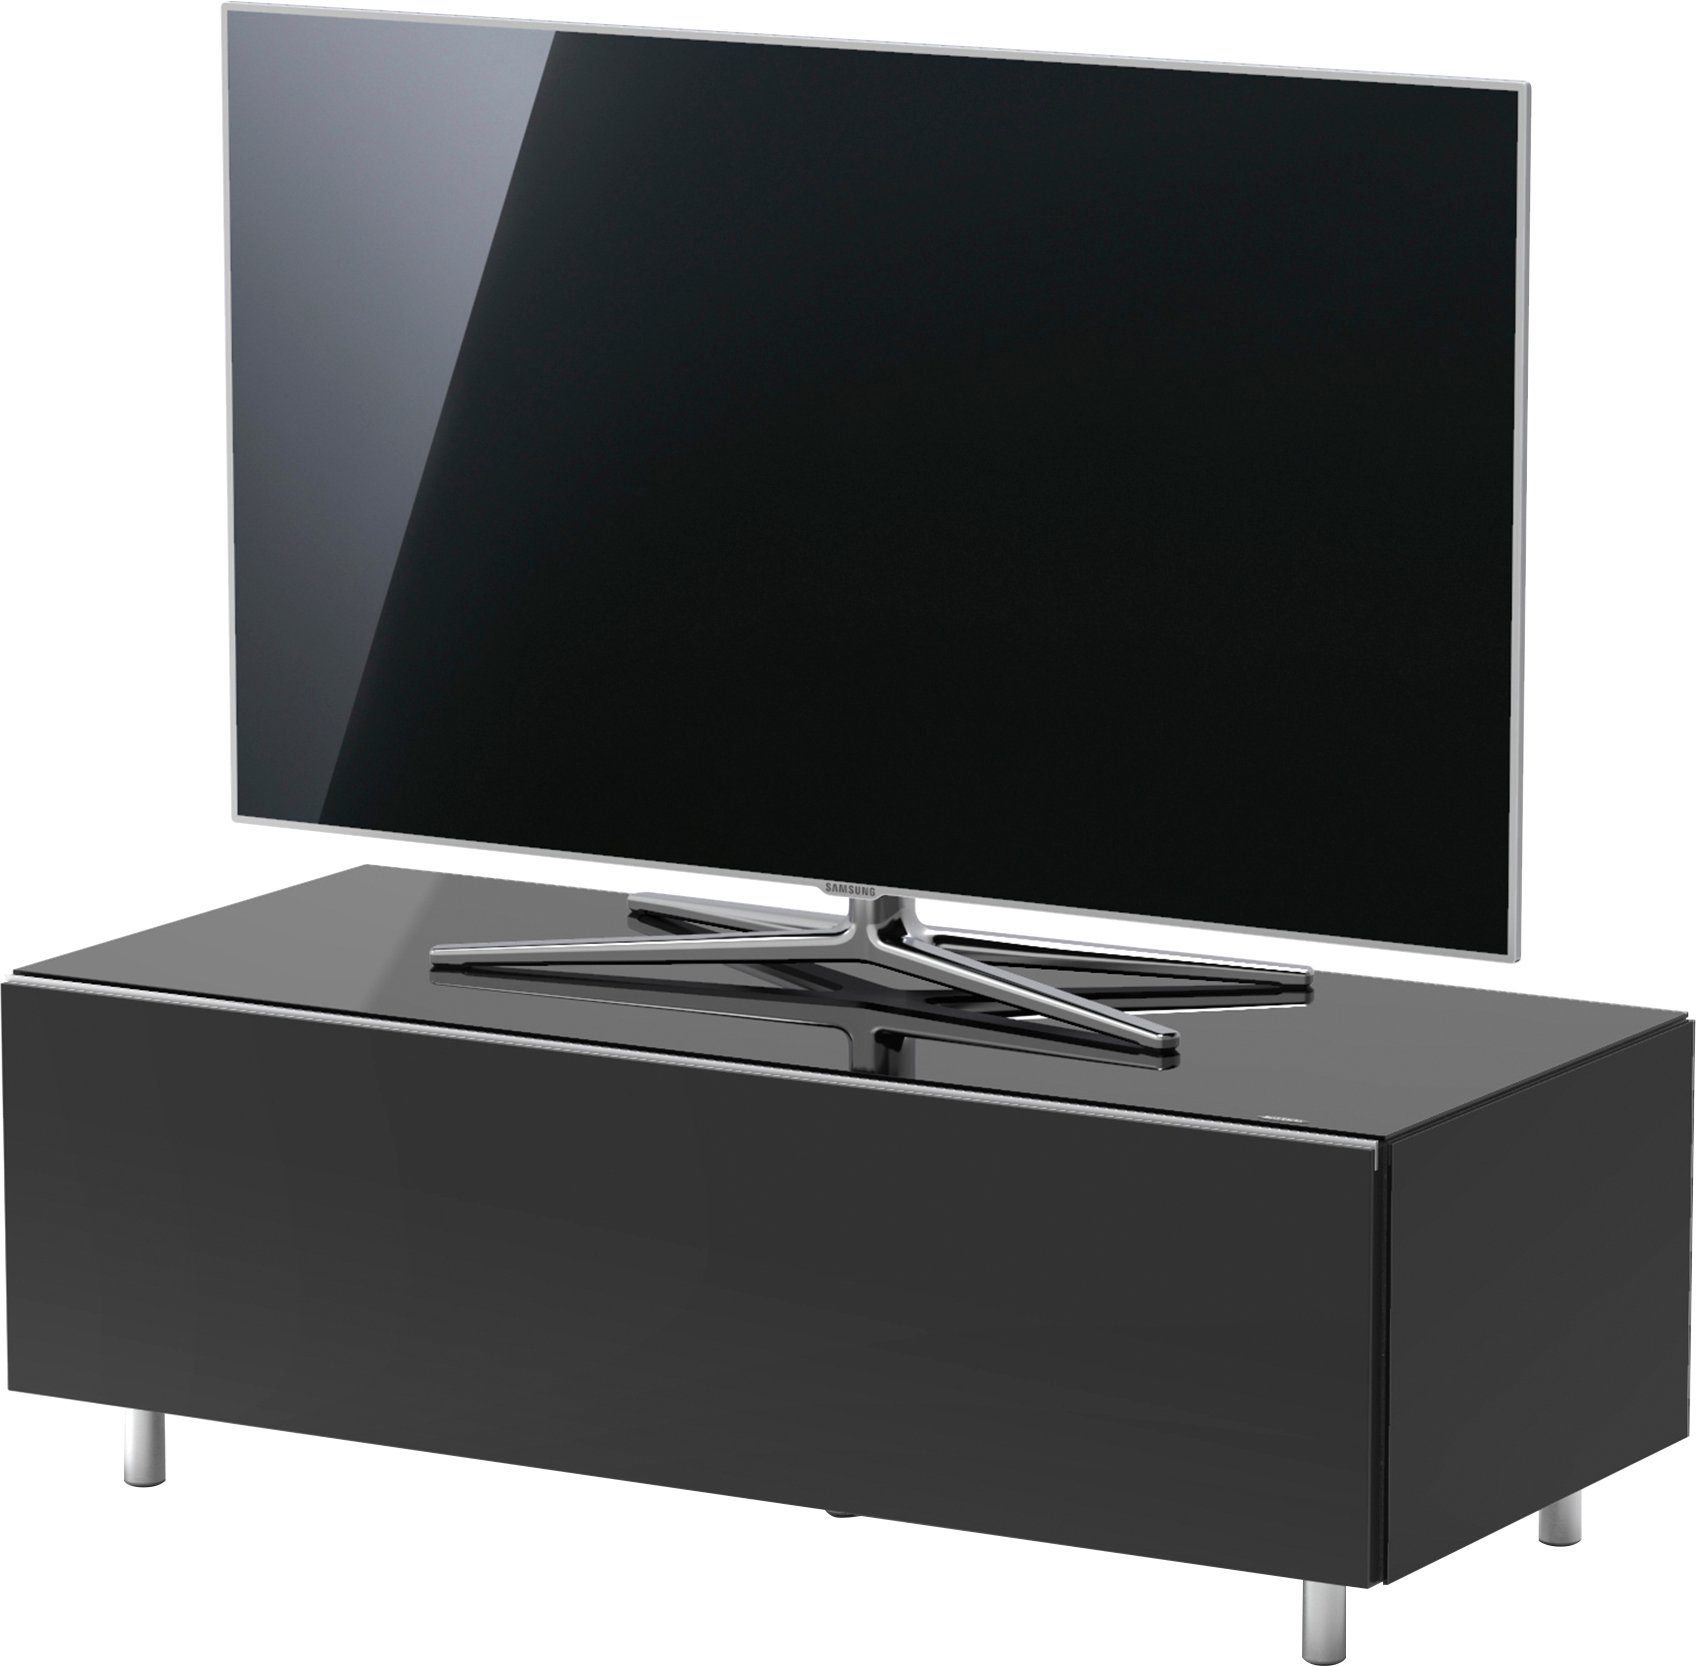 JUST by Spectral 111 wahlweise Lowboard TV-Paket Breite cm, 1100T, schwarz oder Just Basis- Racks, JRL mit